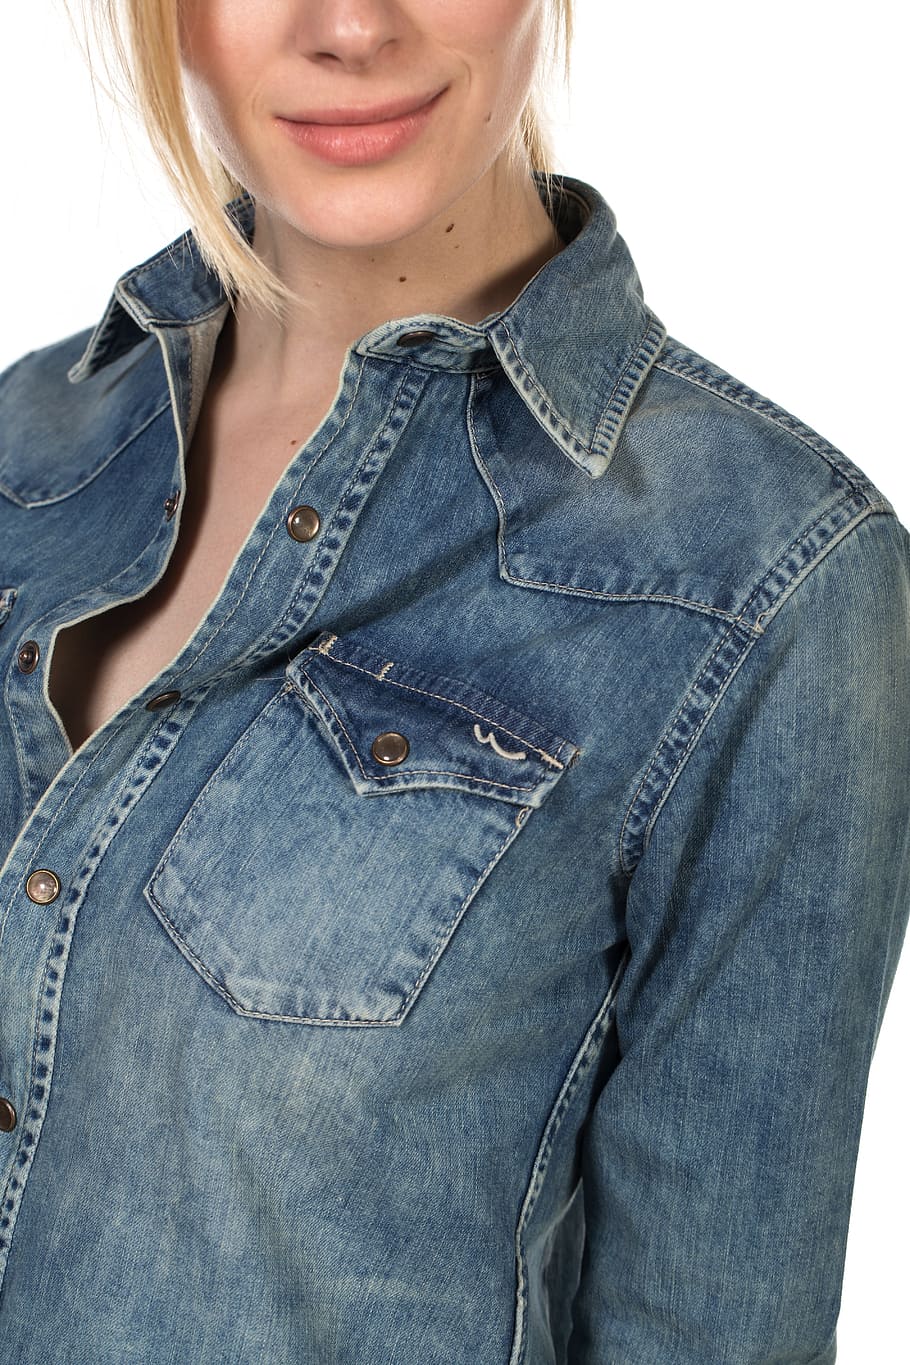 mujer, vistiendo, azul, chaqueta abotonada de mezclilla, Modelo, Moda, Ropa, Estilo, Género, exposición